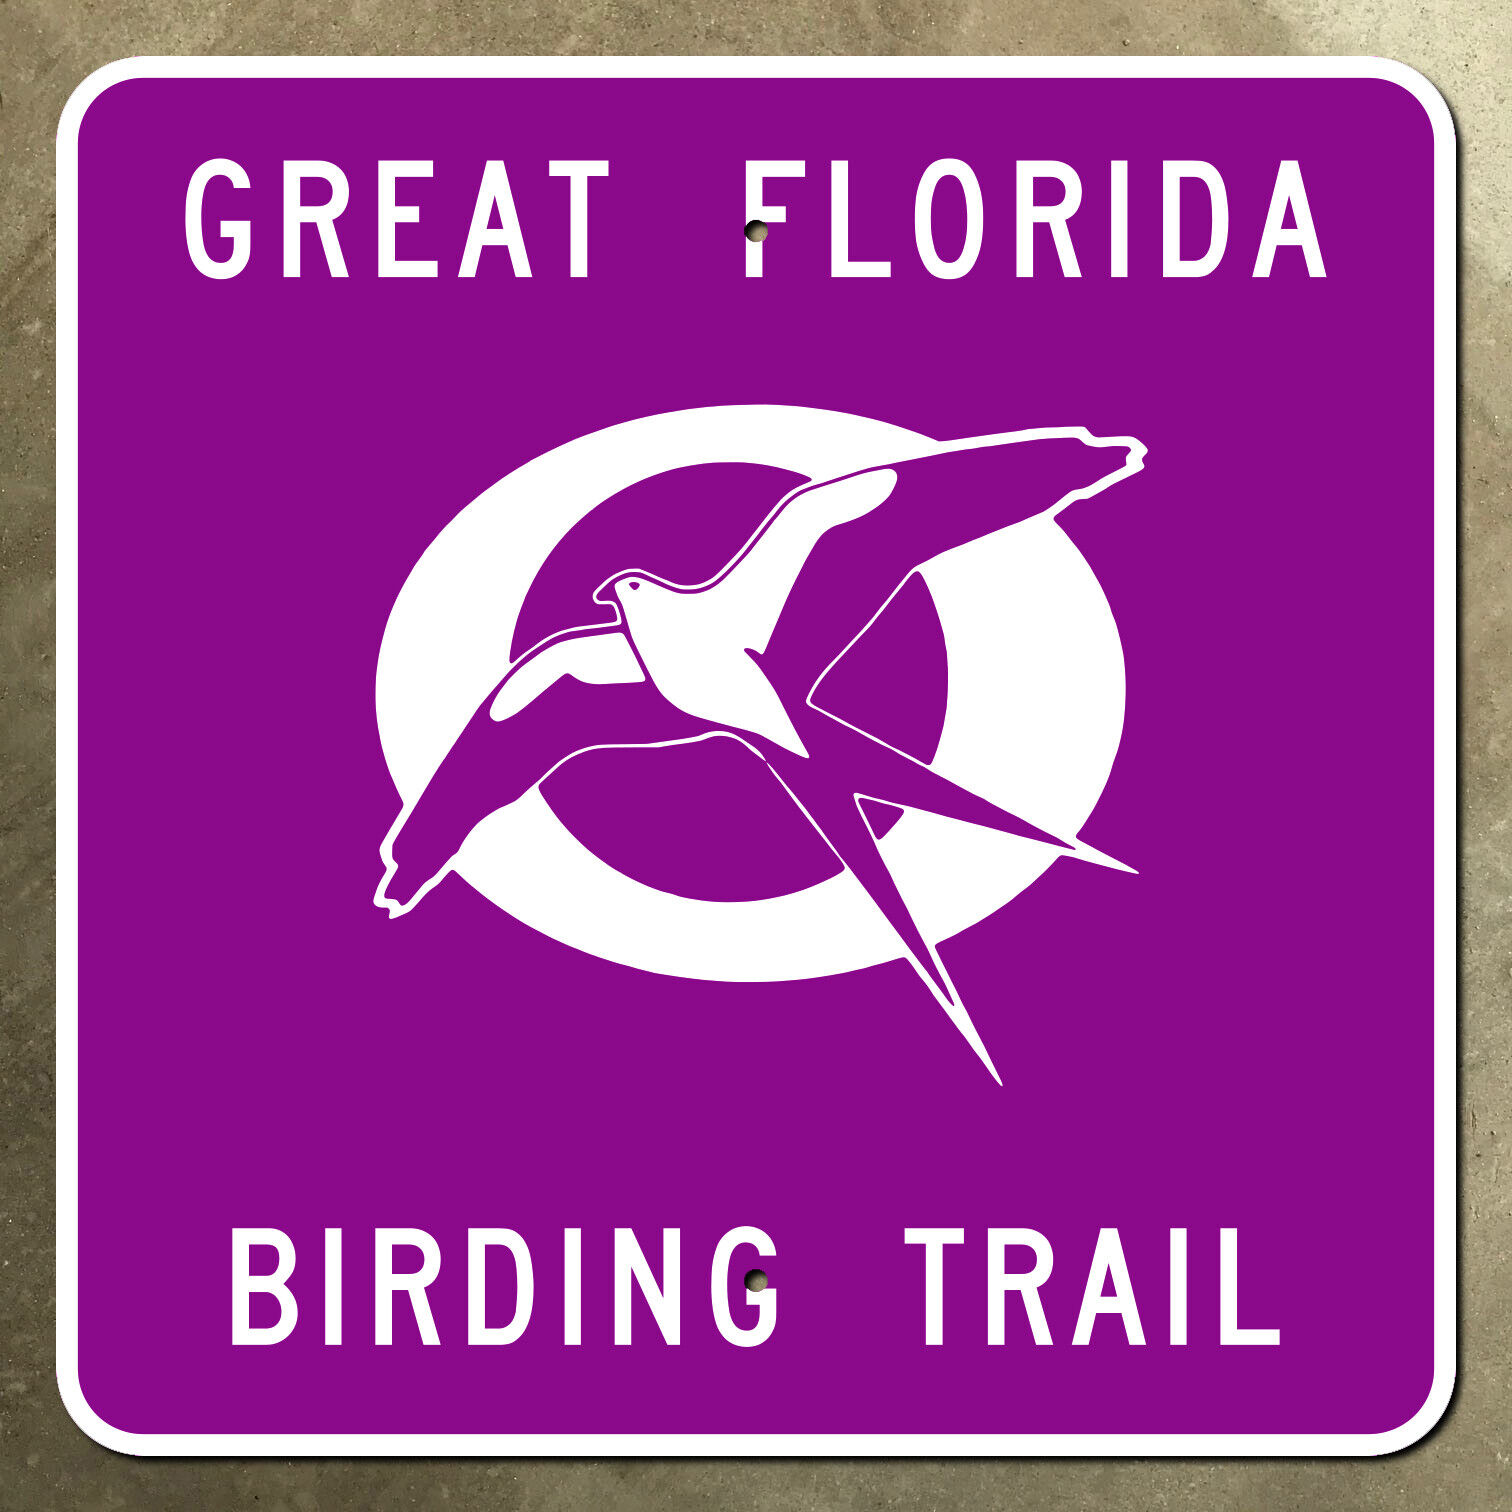 Great Florida Birding Trail highway marker road sign purple 16x16